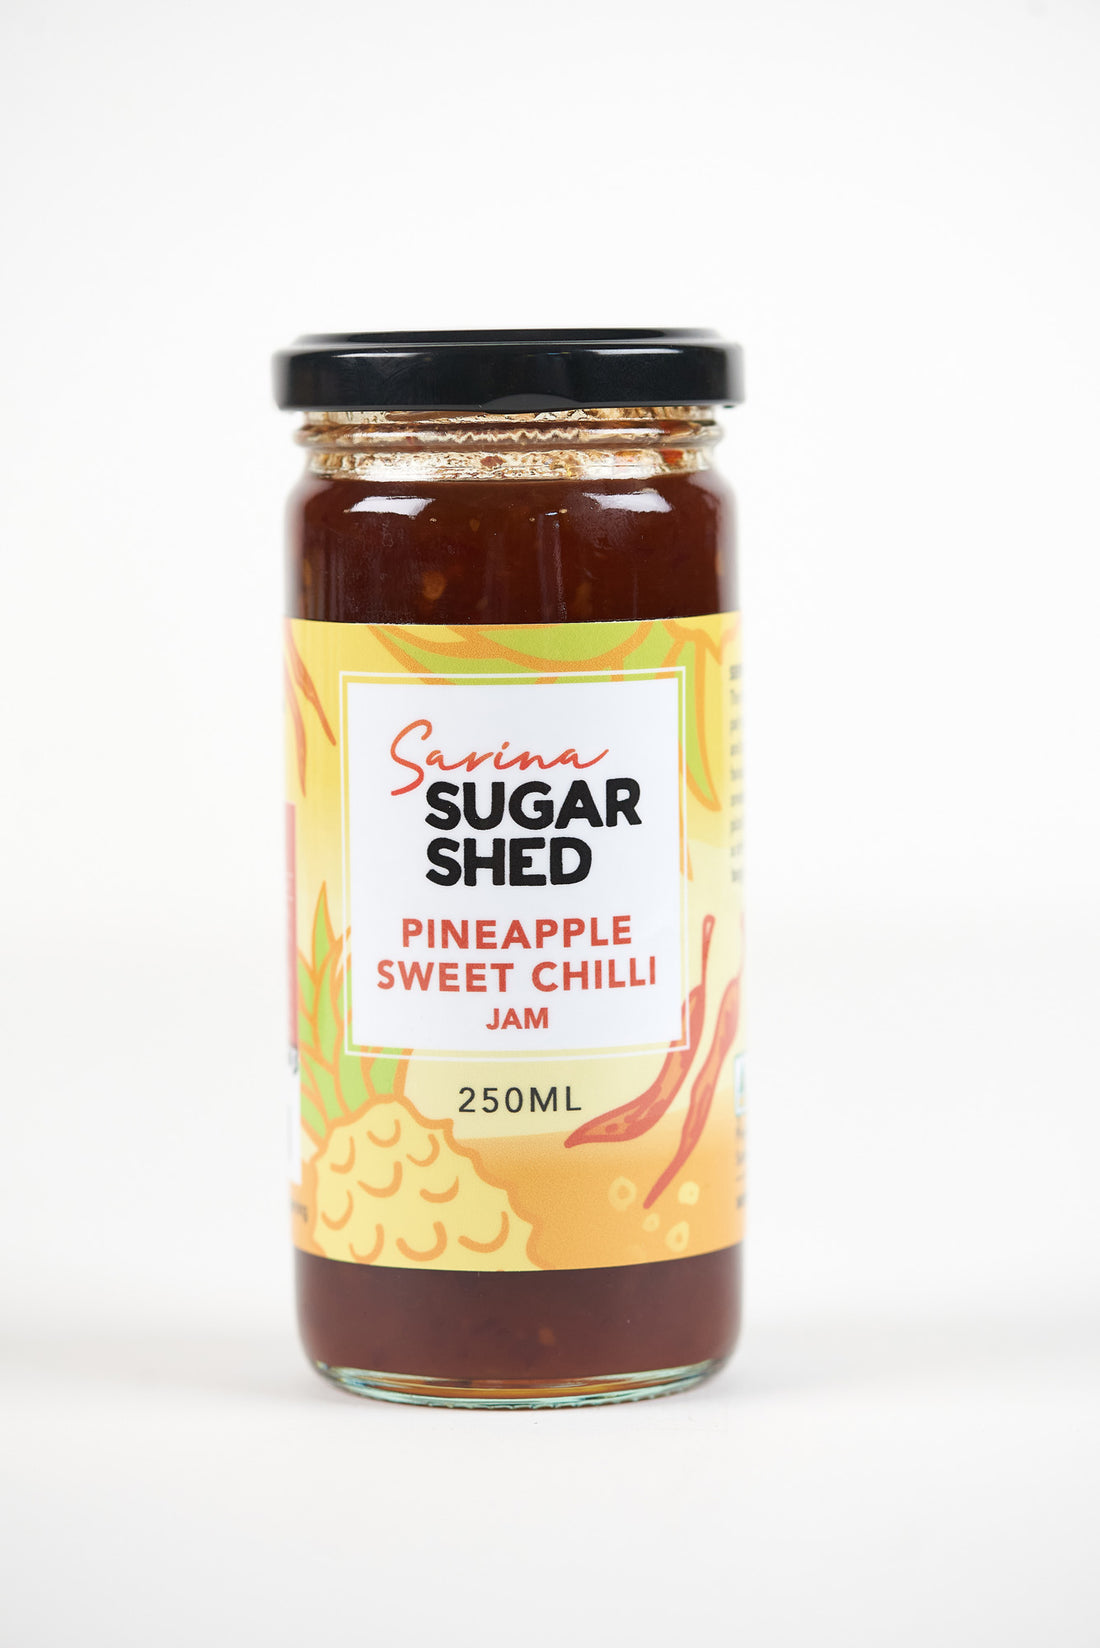 Sarina Sugar Shed Pineapple Sweet Chilli Jam 250ml